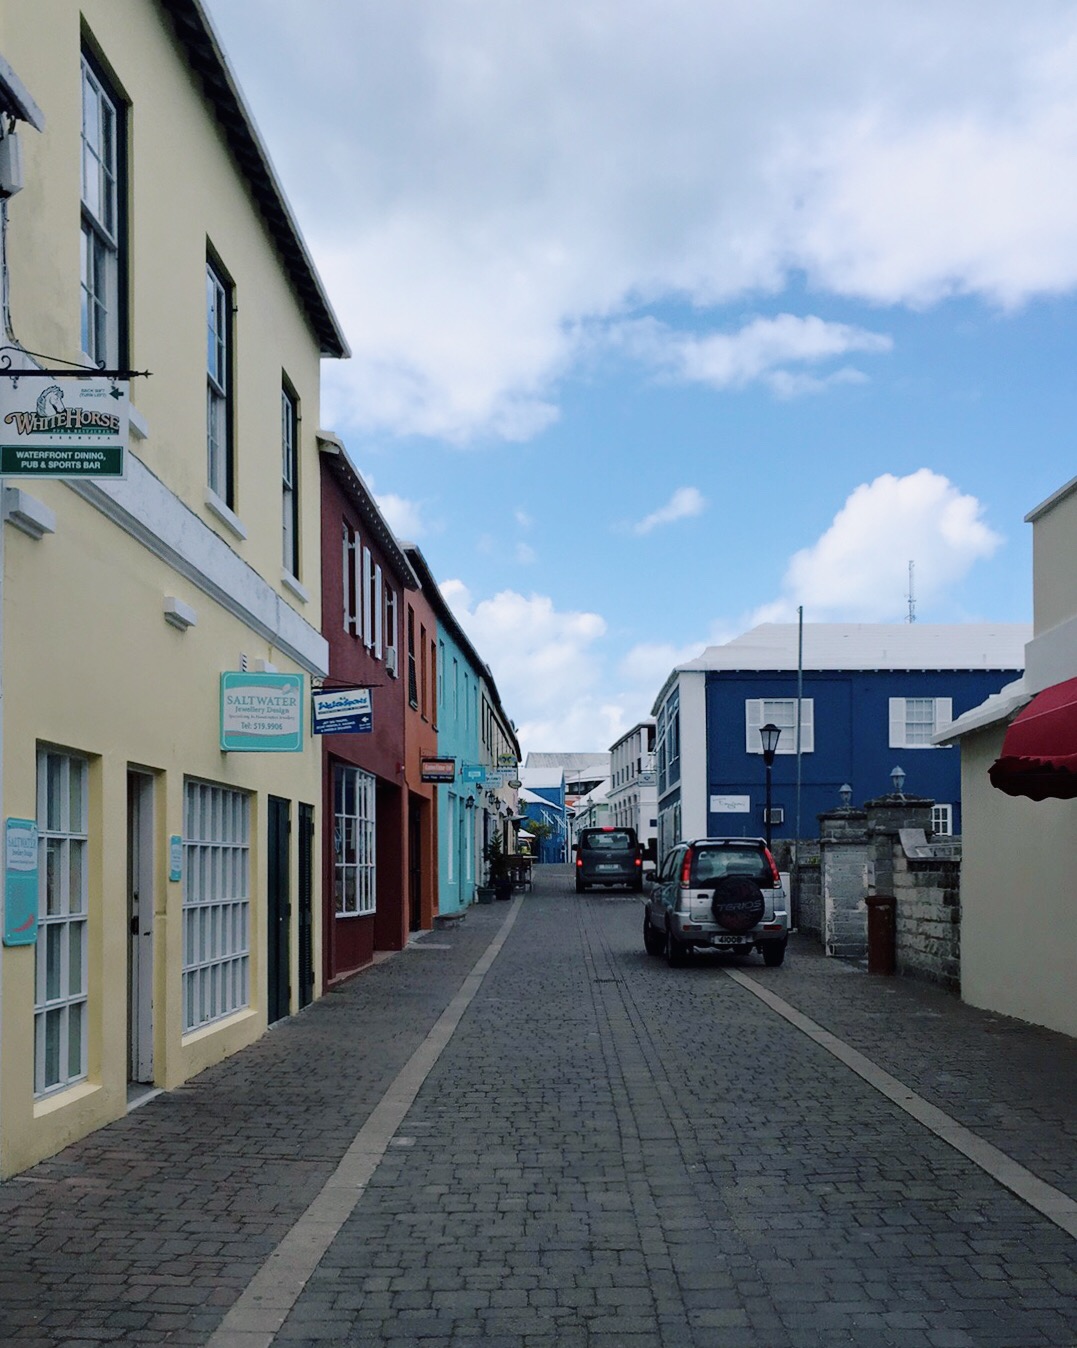  An alleyway of pastel buildings in Historic Old Town St. George. 